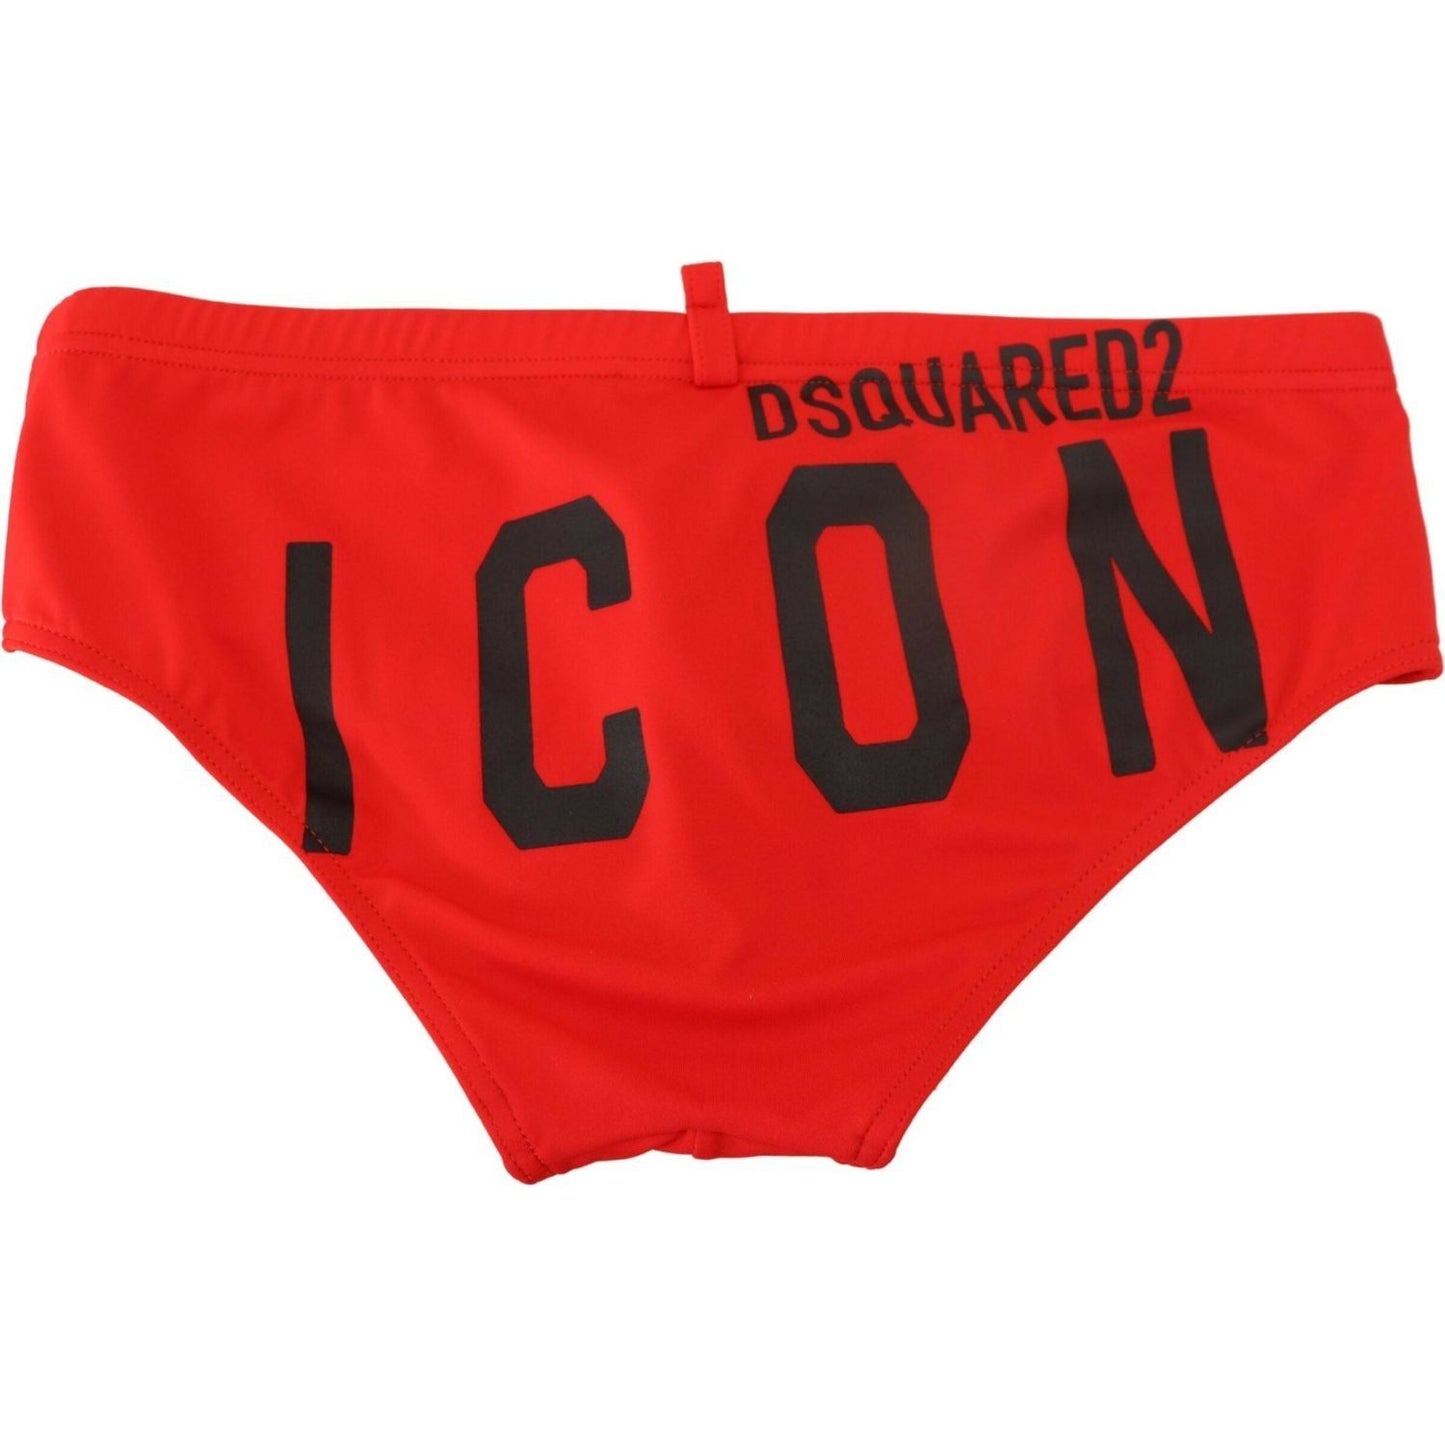 Dsquared² Red ICON Print Swim Briefs red-black-icon-print-mens-swim-brief-swimwear IMG_6224-scaled-b3f910ed-15c.jpg